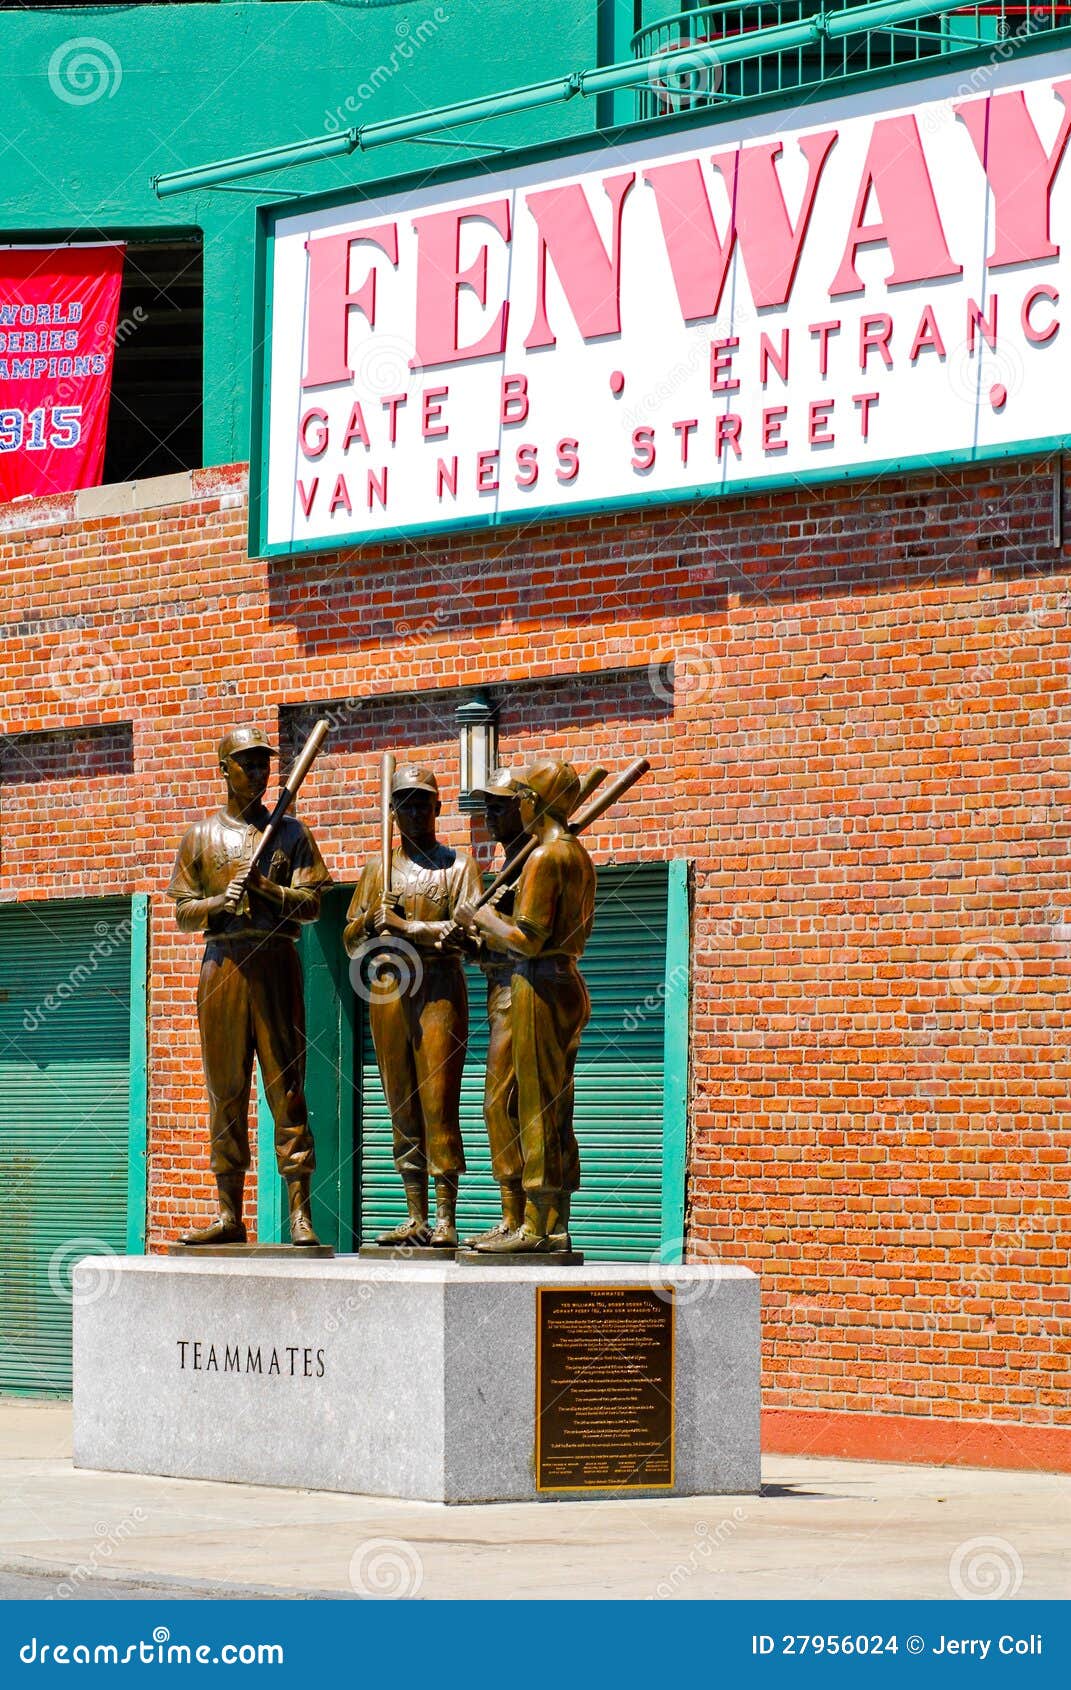 Teammates statue outside Gate B at Fenway Park on Van Ness Street